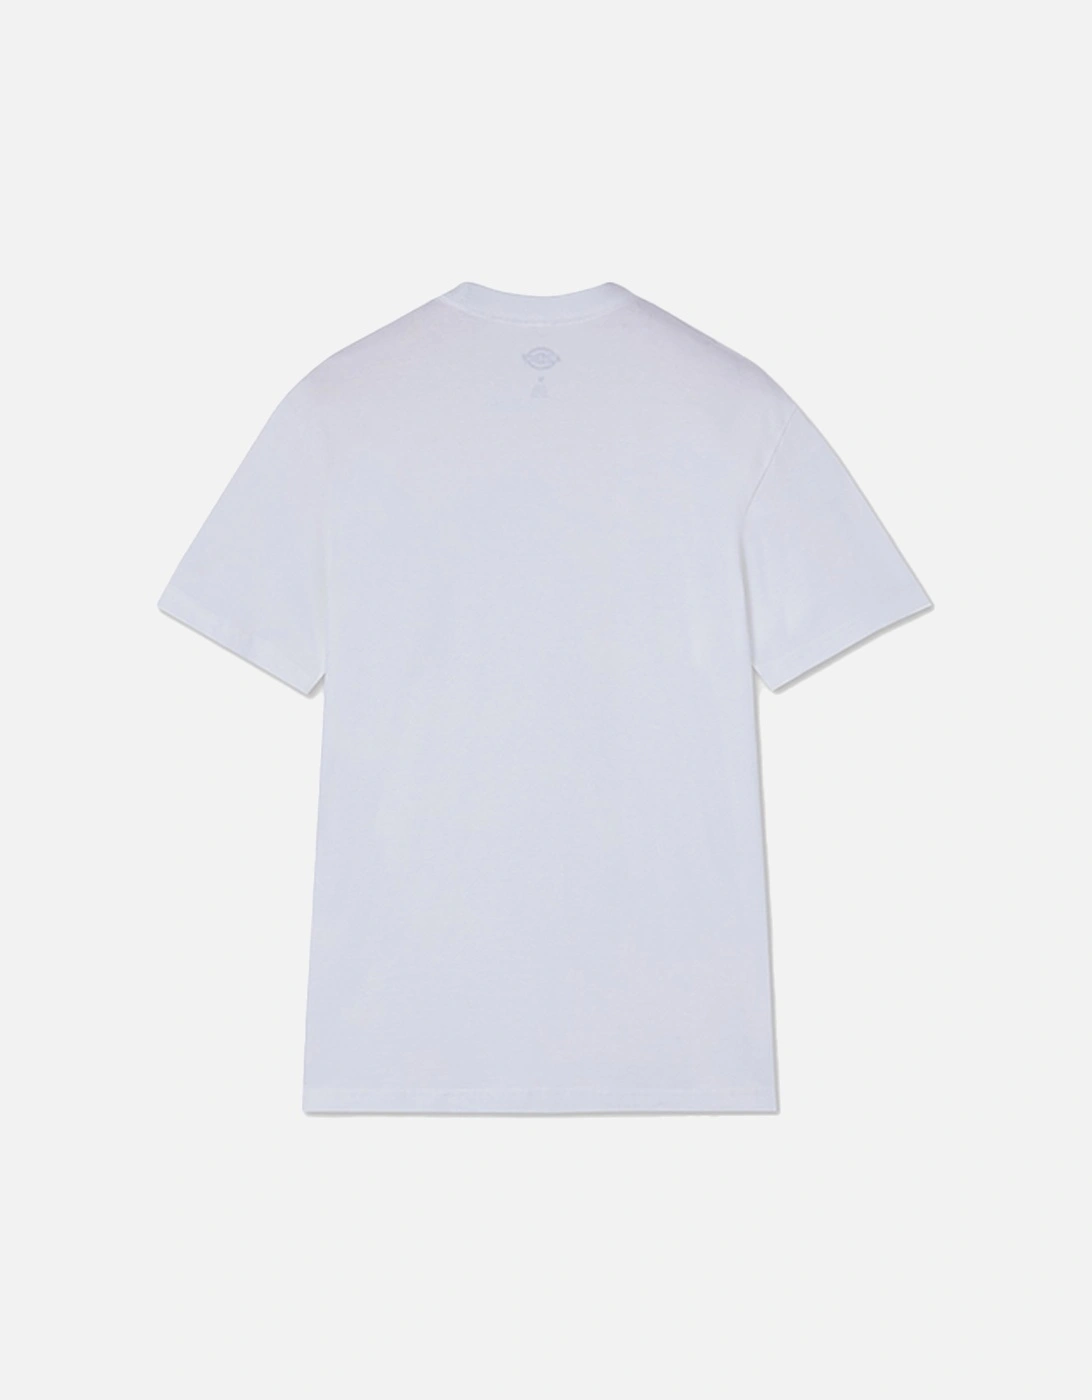 Men's Short Sleeve Cotton T-shirt White